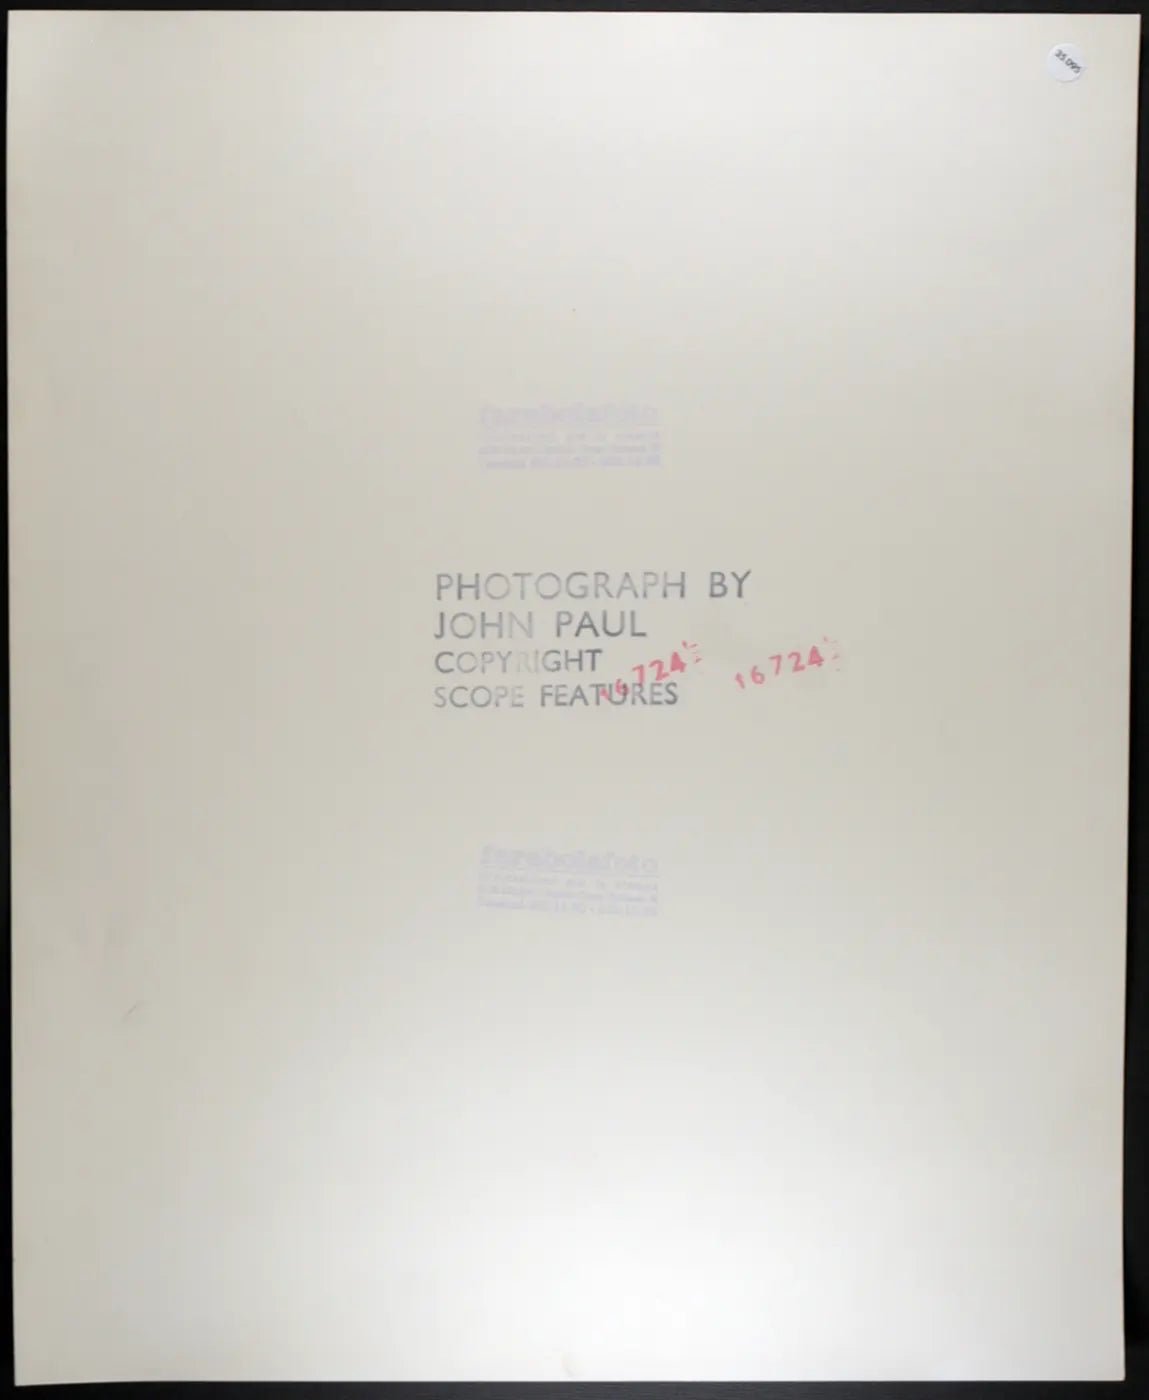 Candy Davies anni 80 Ft 35095 - Stampa 24x37 cm - Farabola Stampa ai sali d'argento